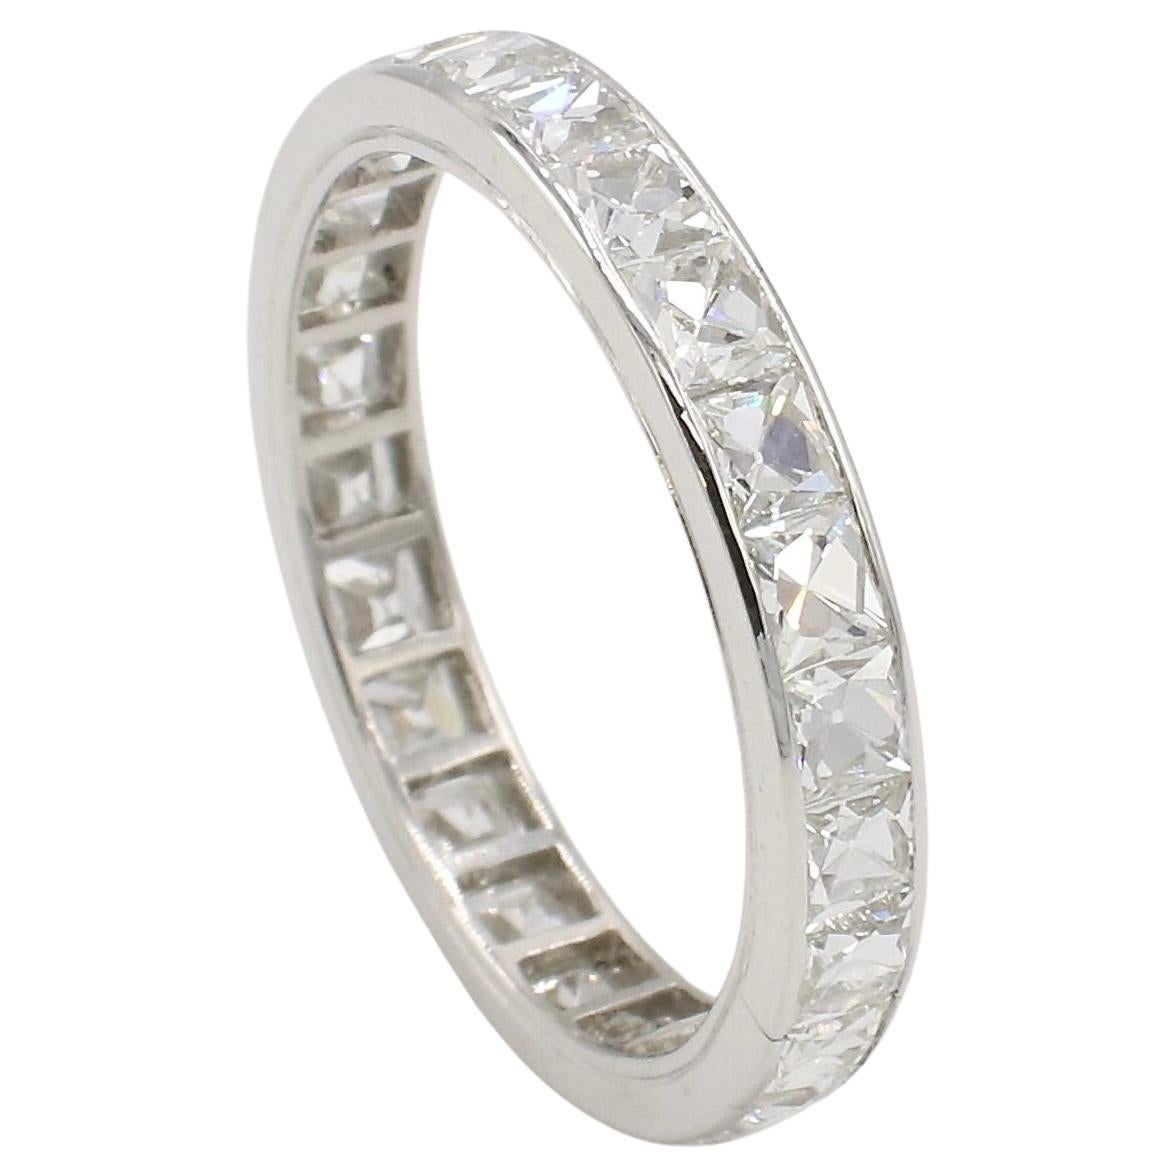 Platinum French Cut 2.50 Carat Natural Diamond Eternity Band Ring 